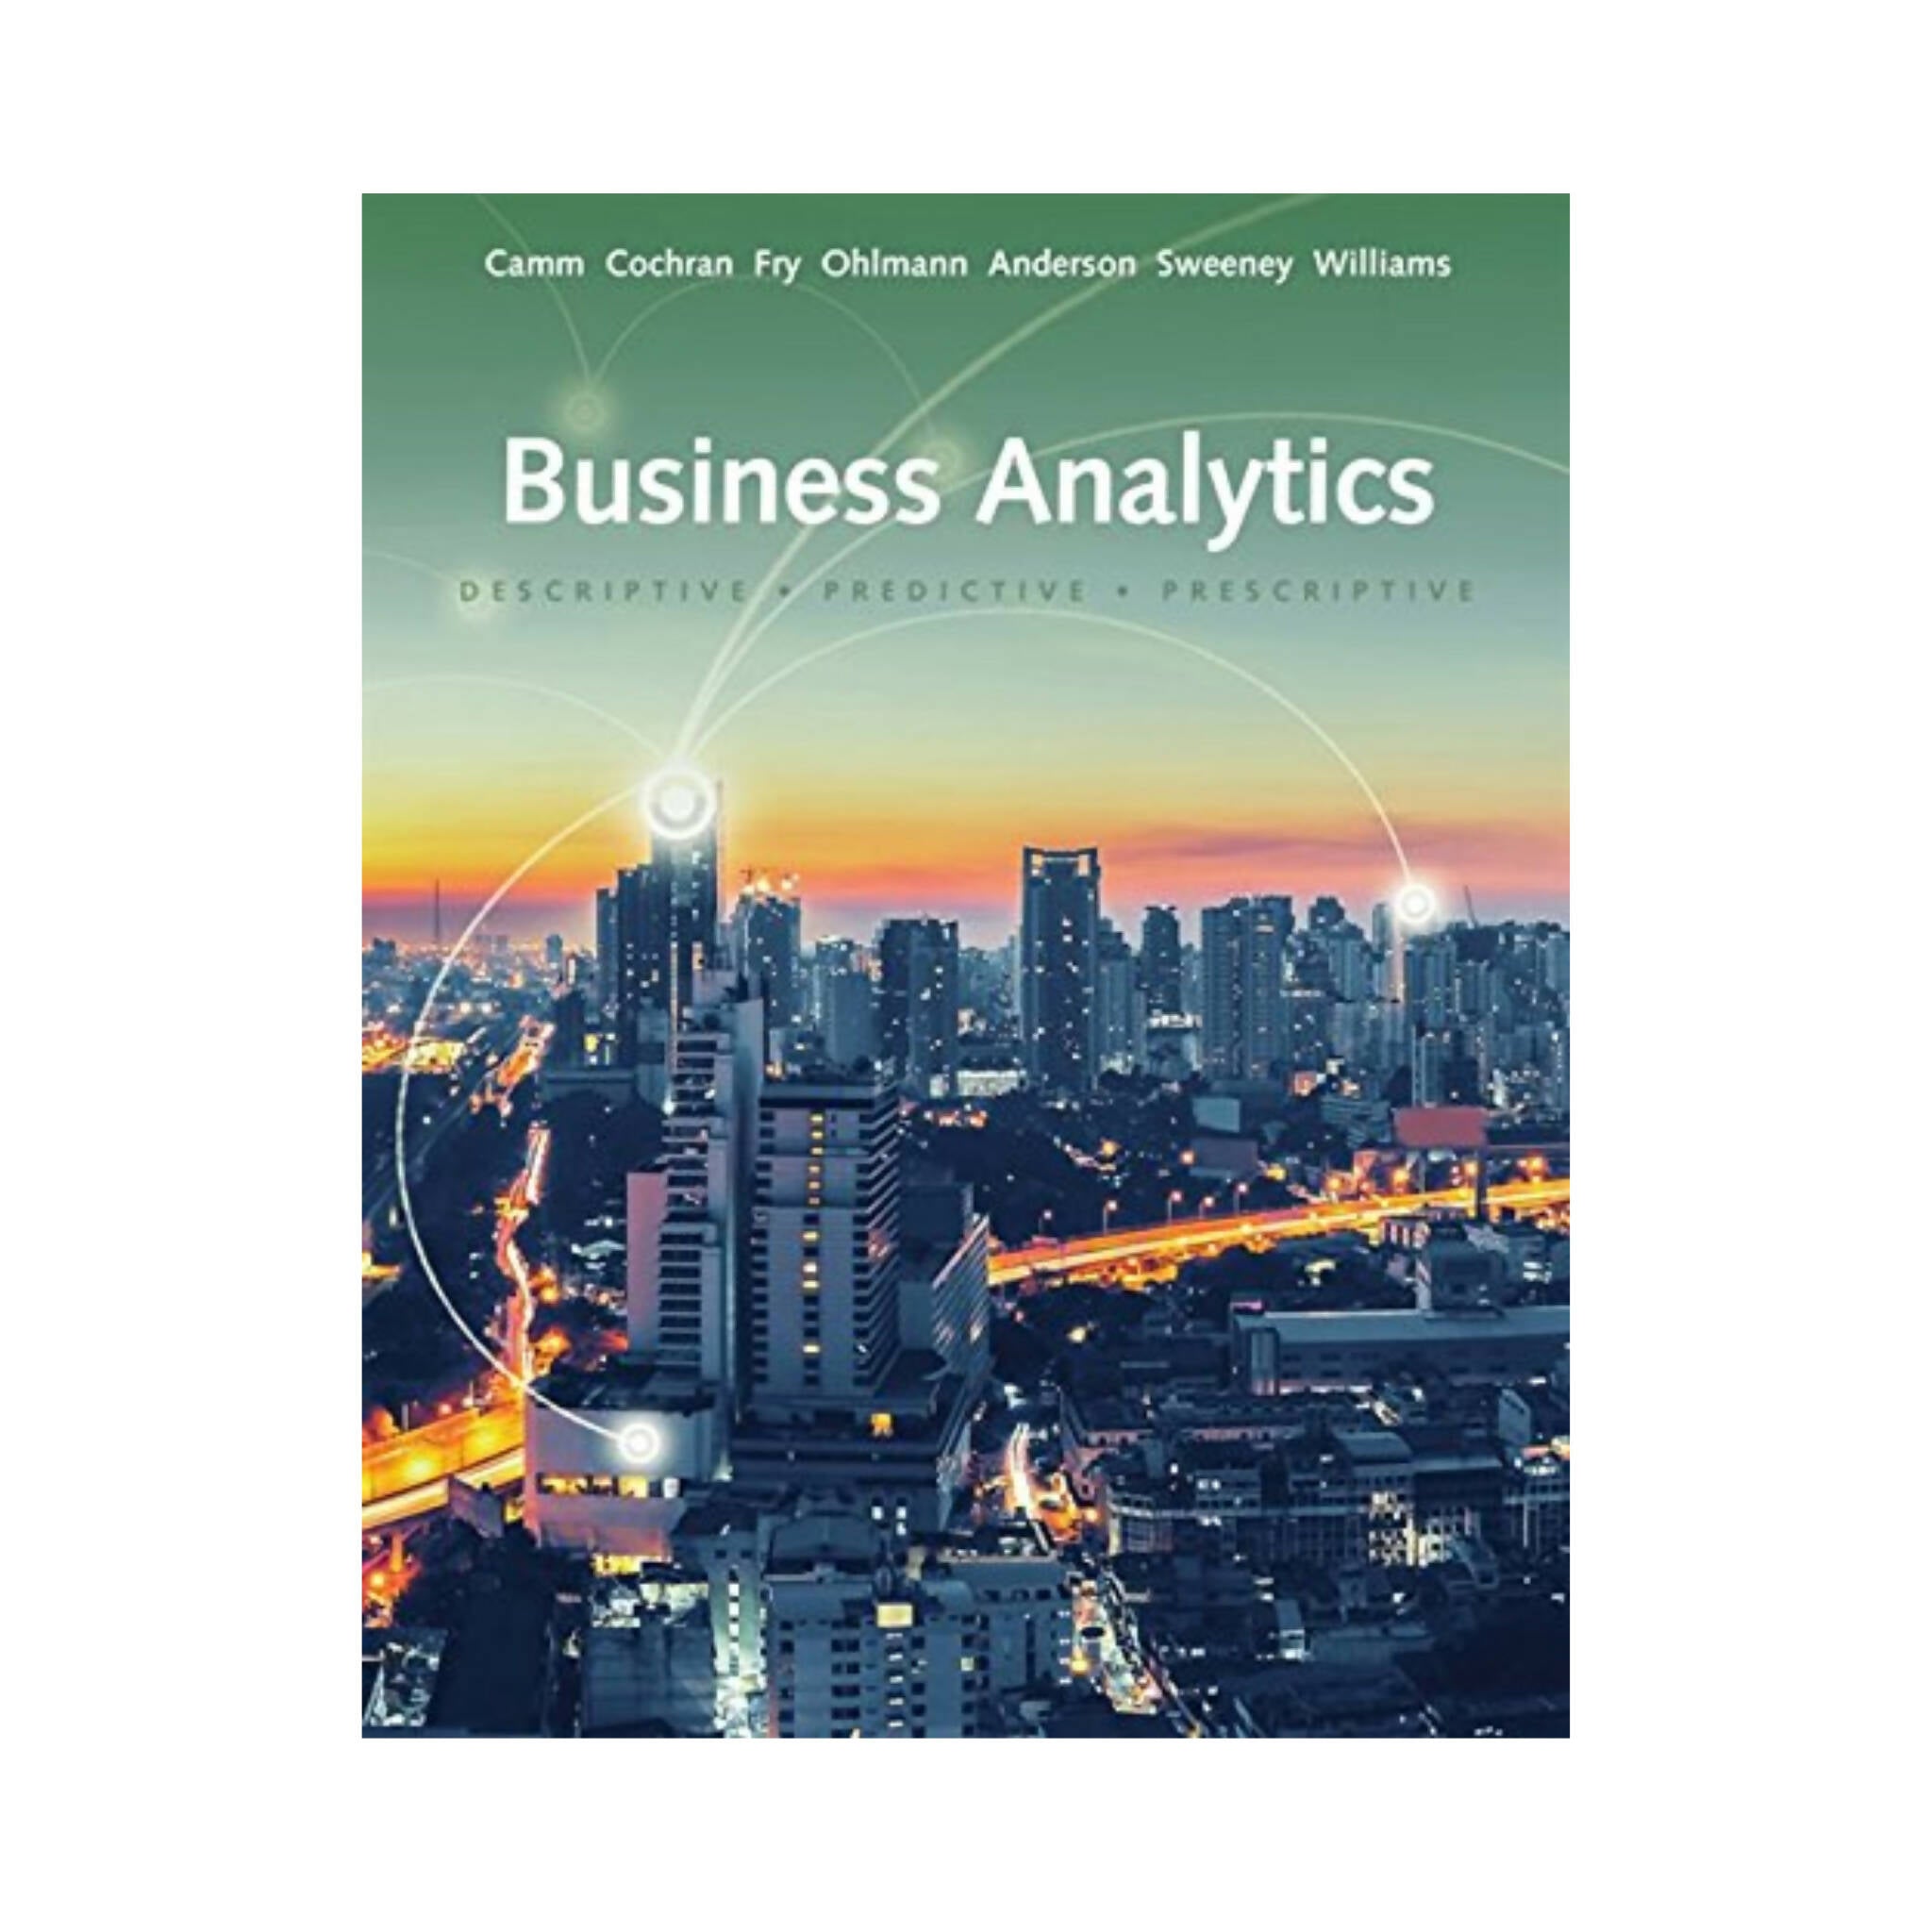 Book, Business Analytics